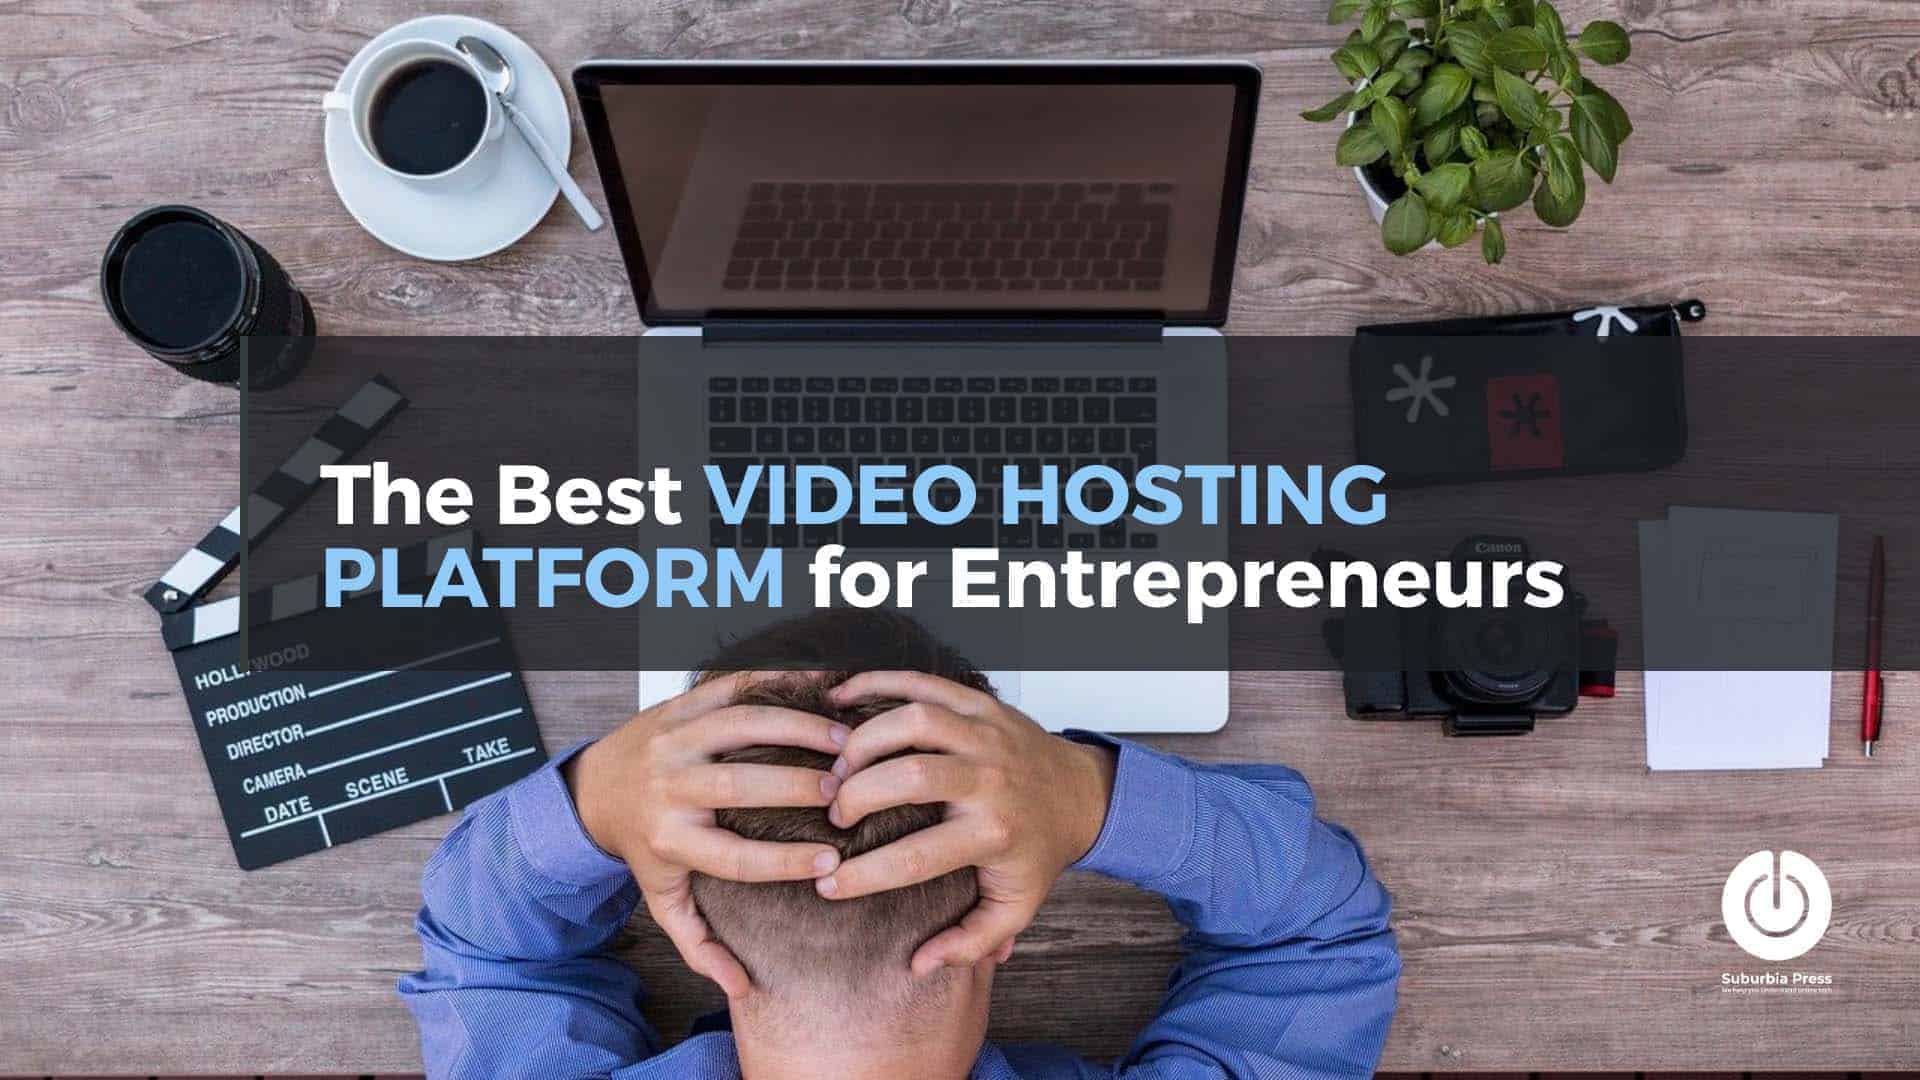 Searchie: The BEST Video Hosting Platform for Entrepreneurs